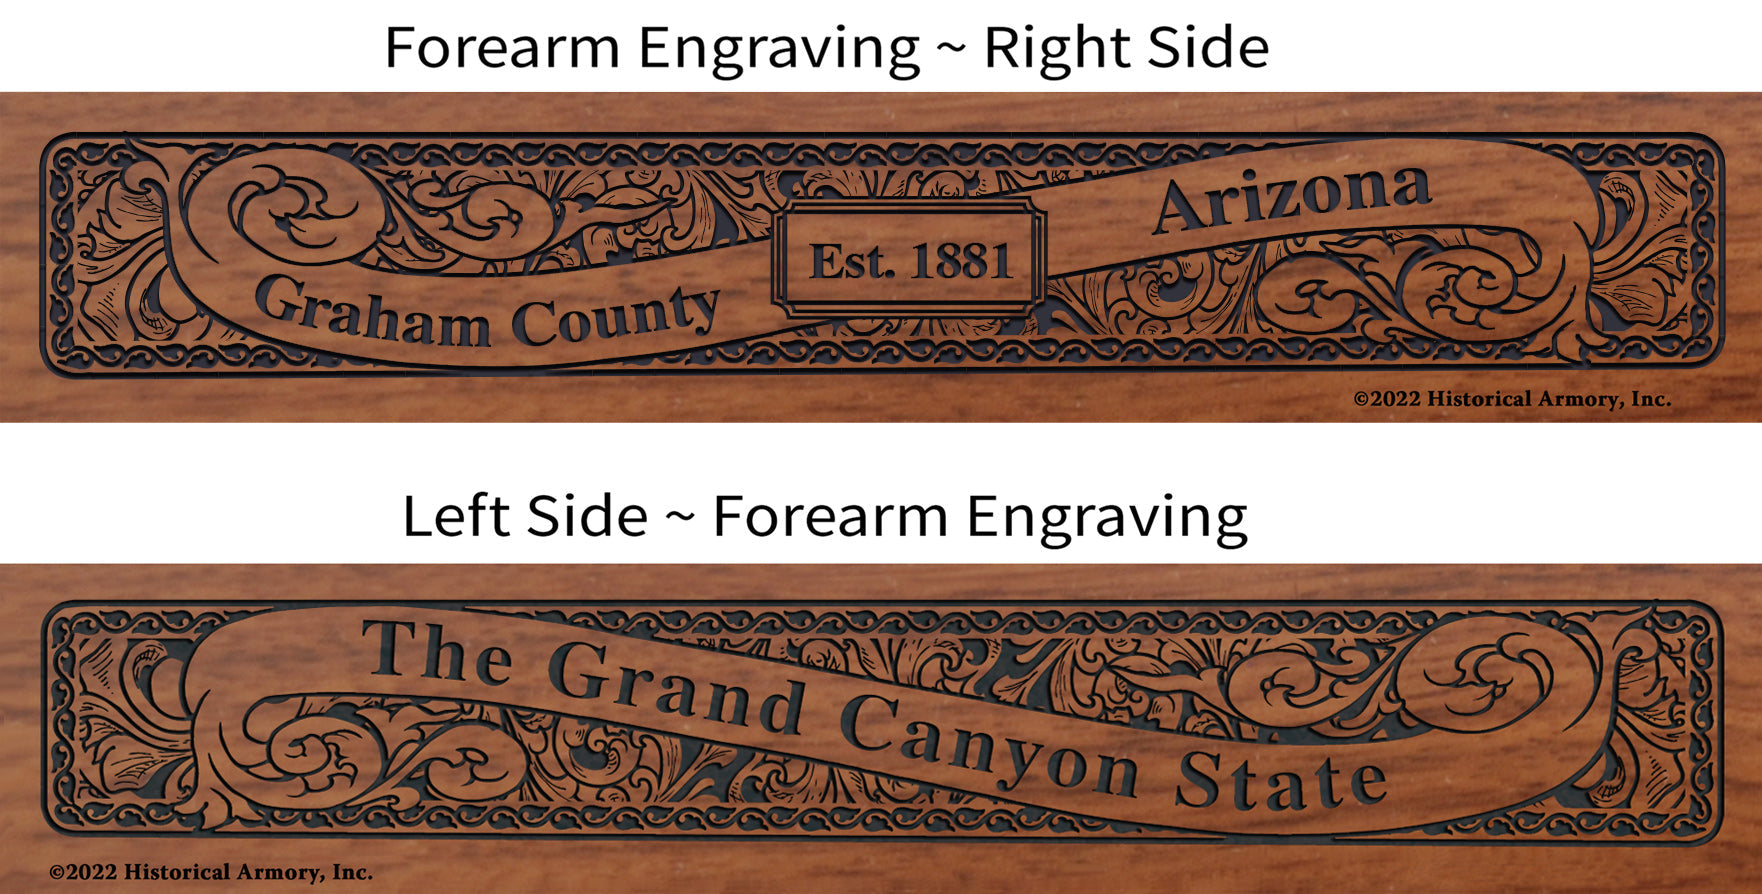 Graham County Arizona Engraved Rifle Forearm